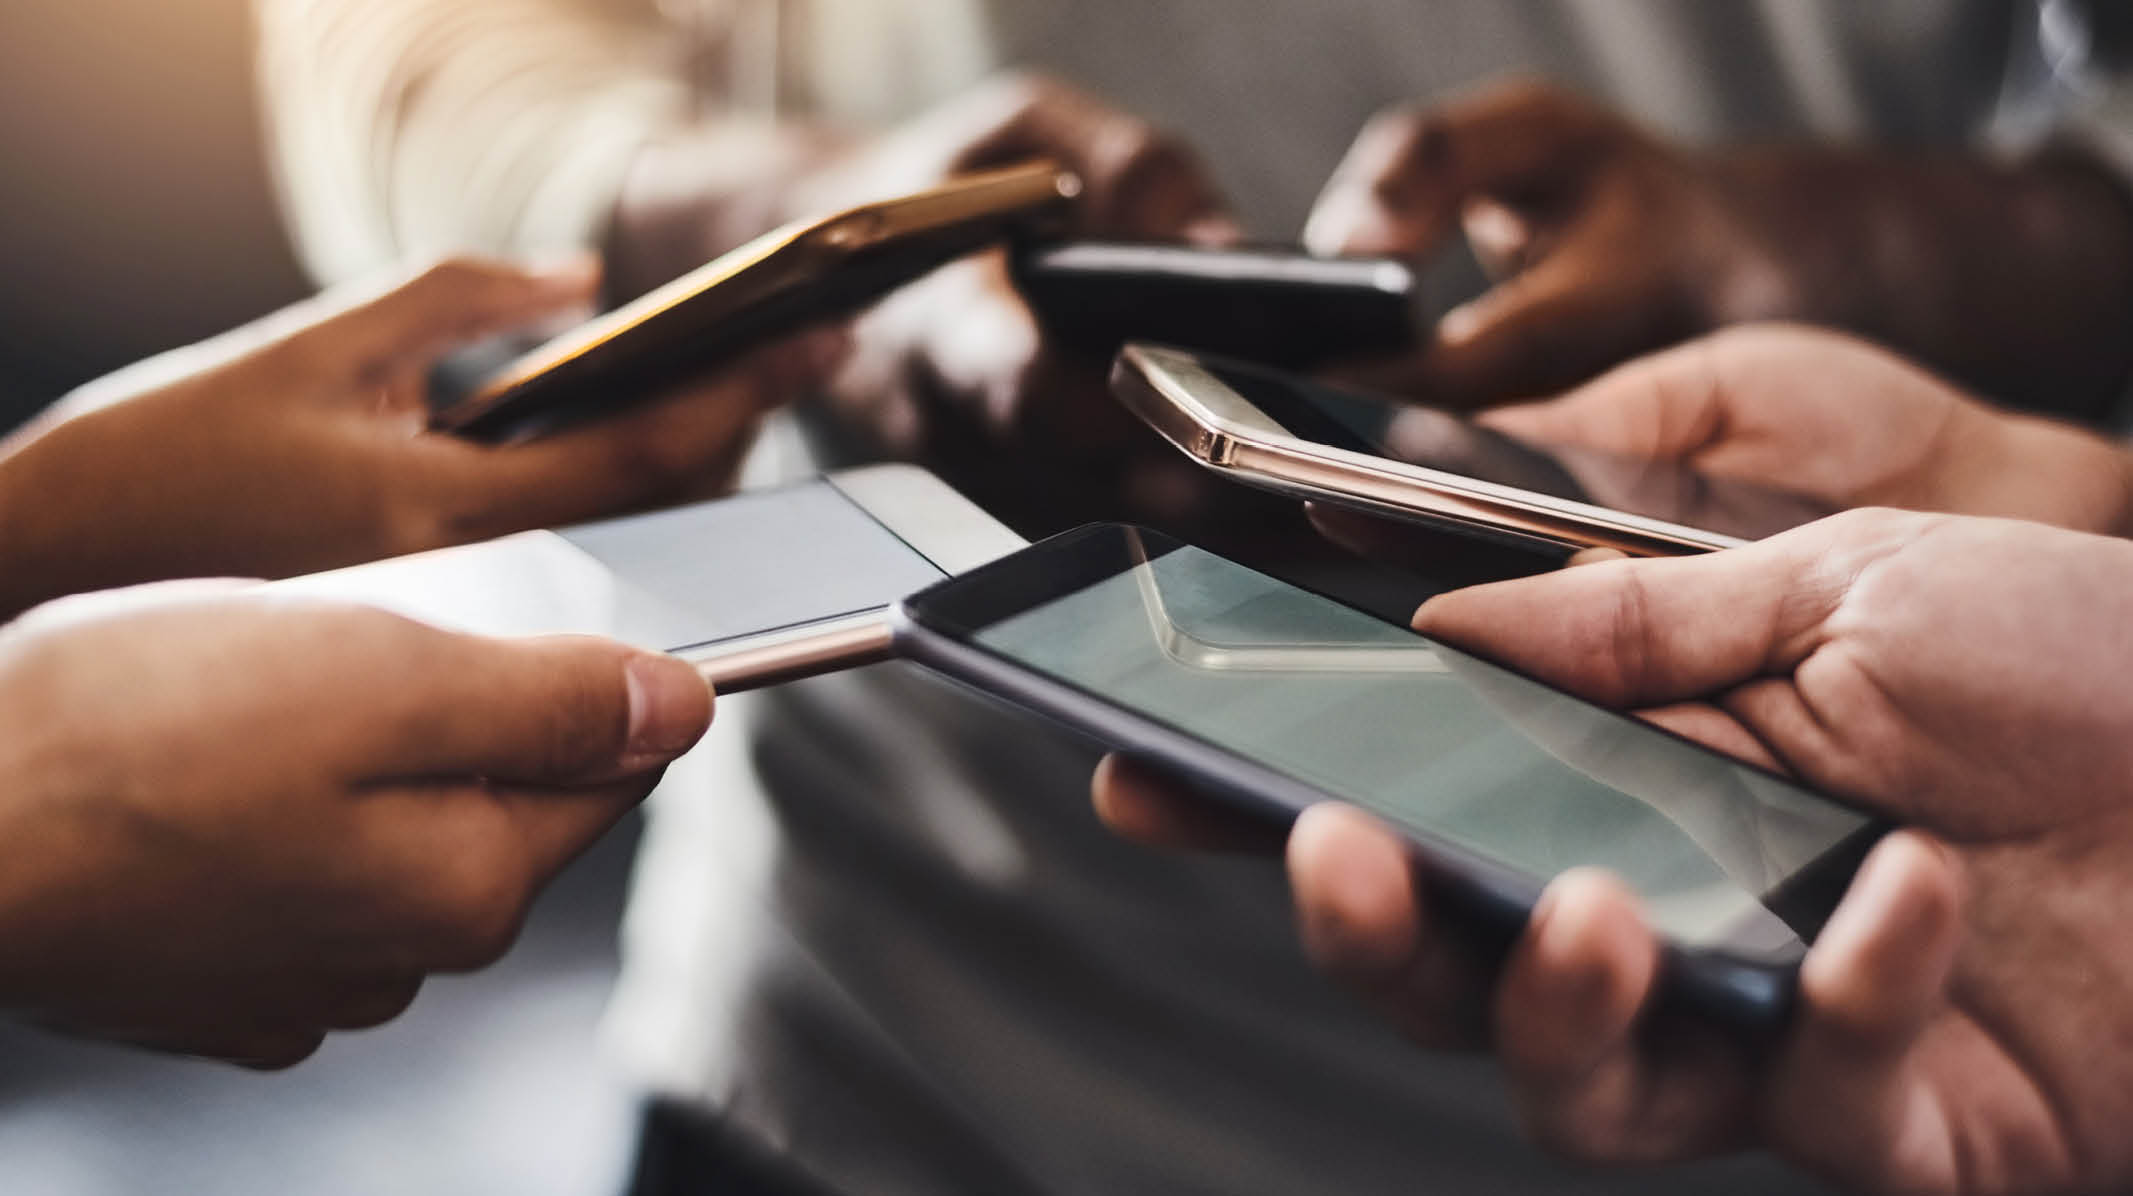 Society’s digital addiction: The smartphone challenge